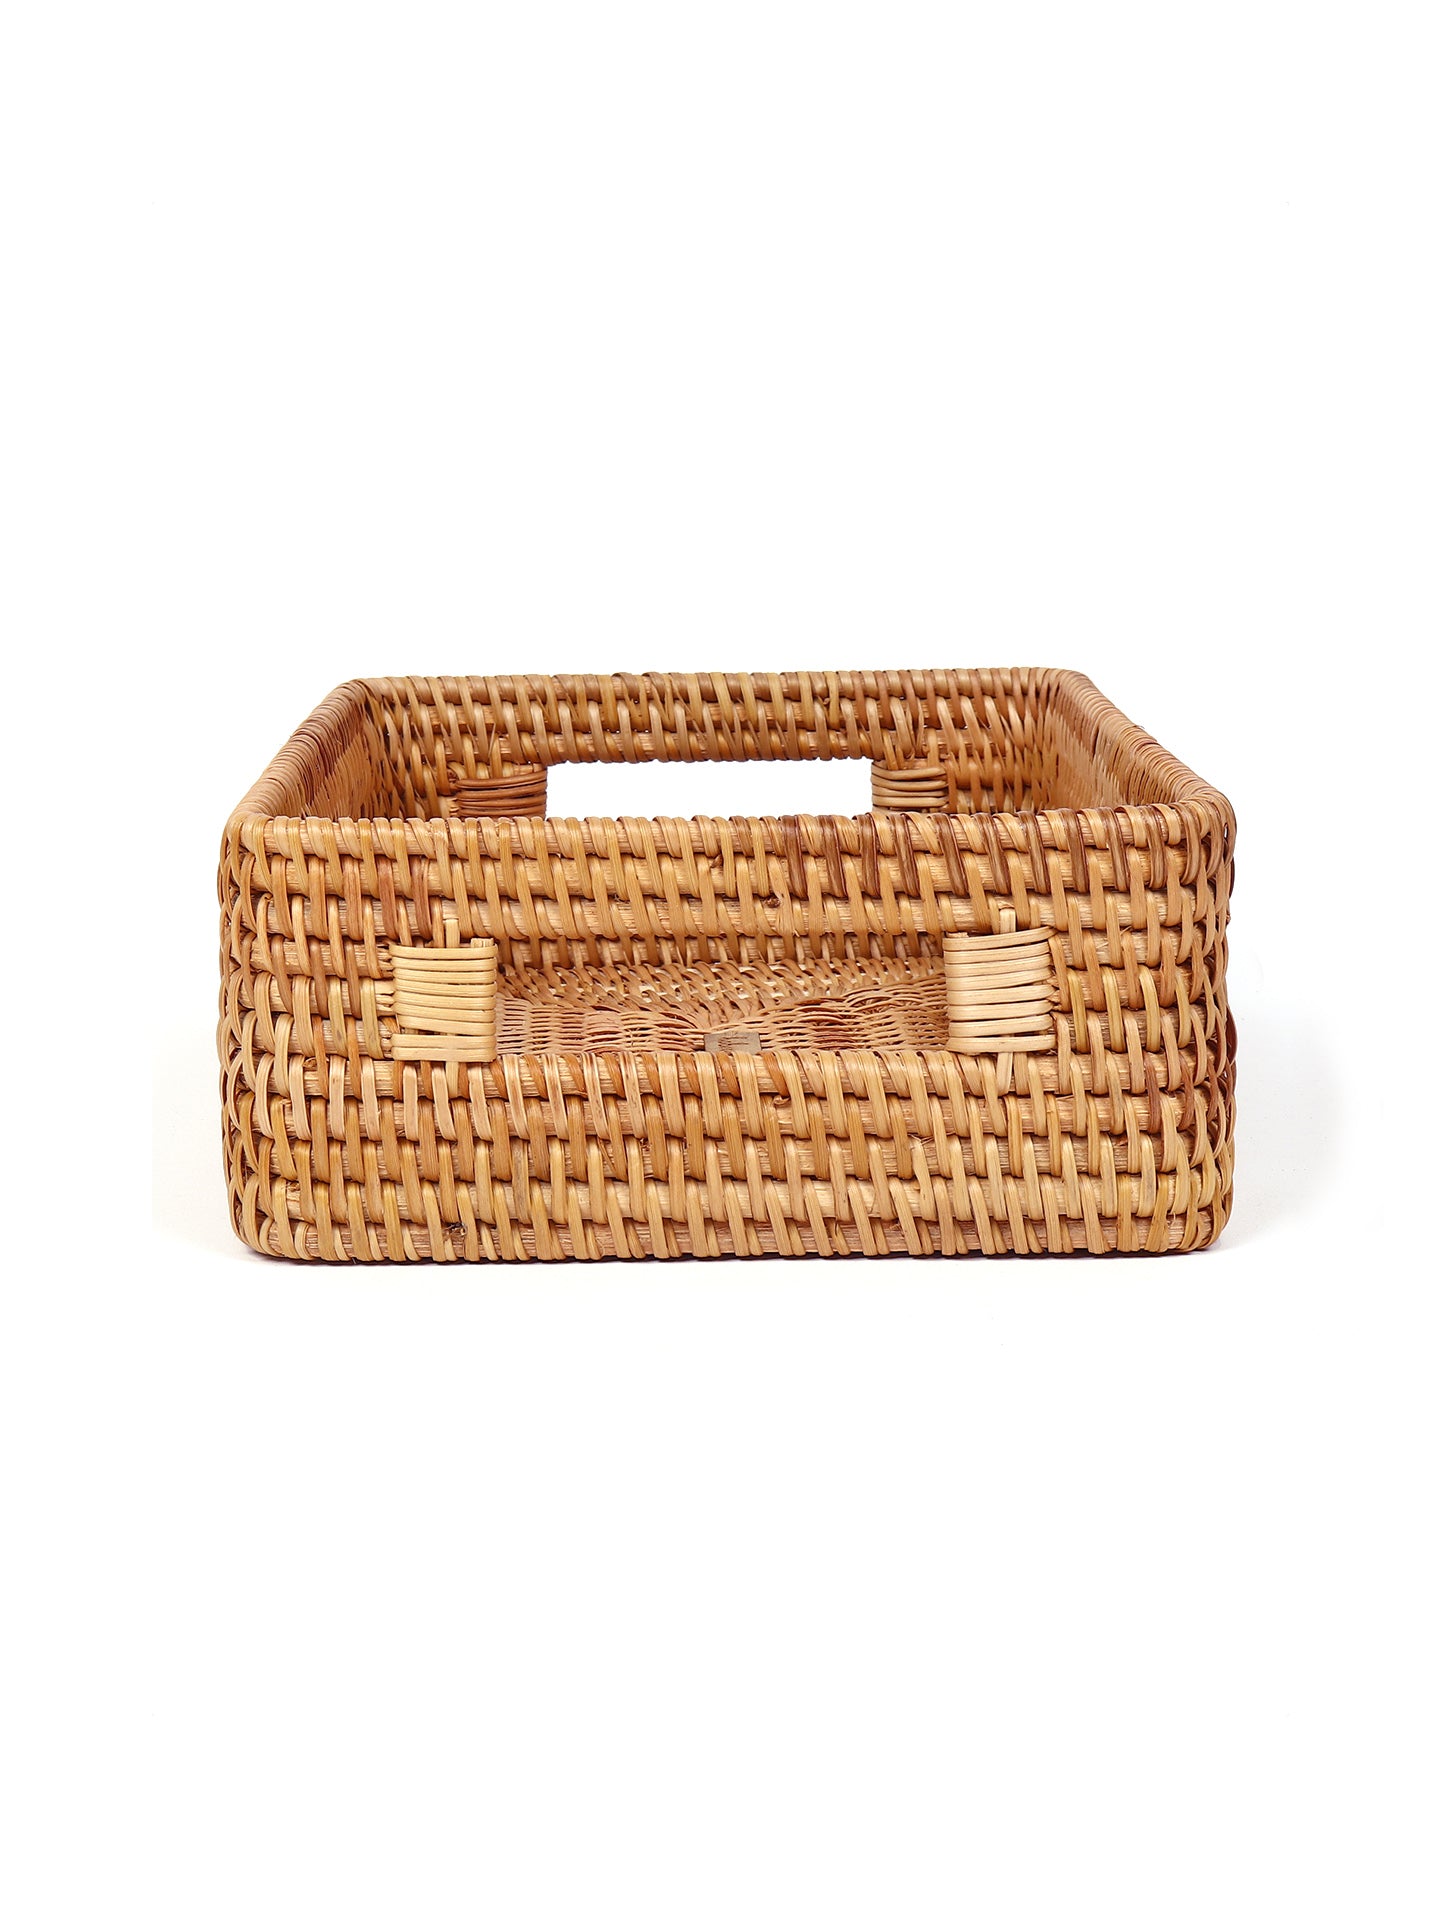 Bamboo Storage Baskets